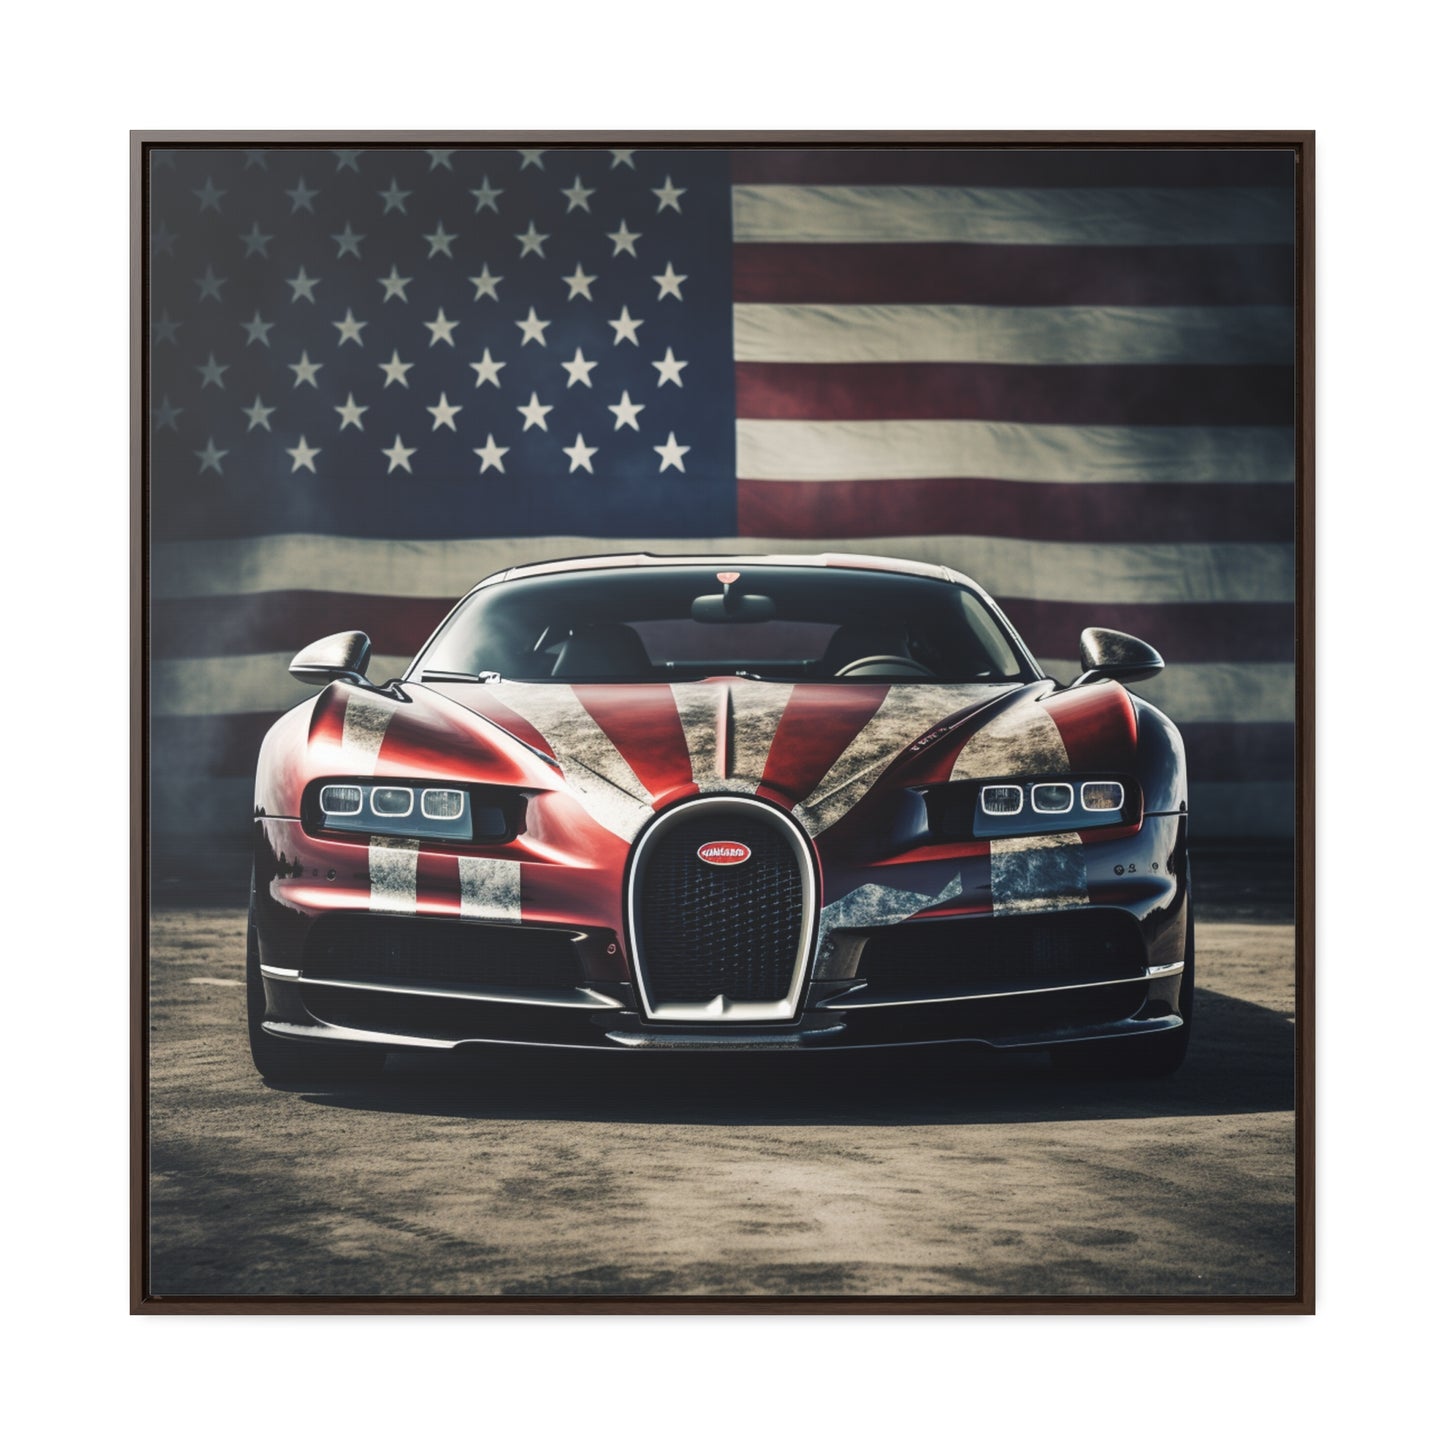 Gallery Canvas Wraps, Square Frame American Flag Background Bugatti 3